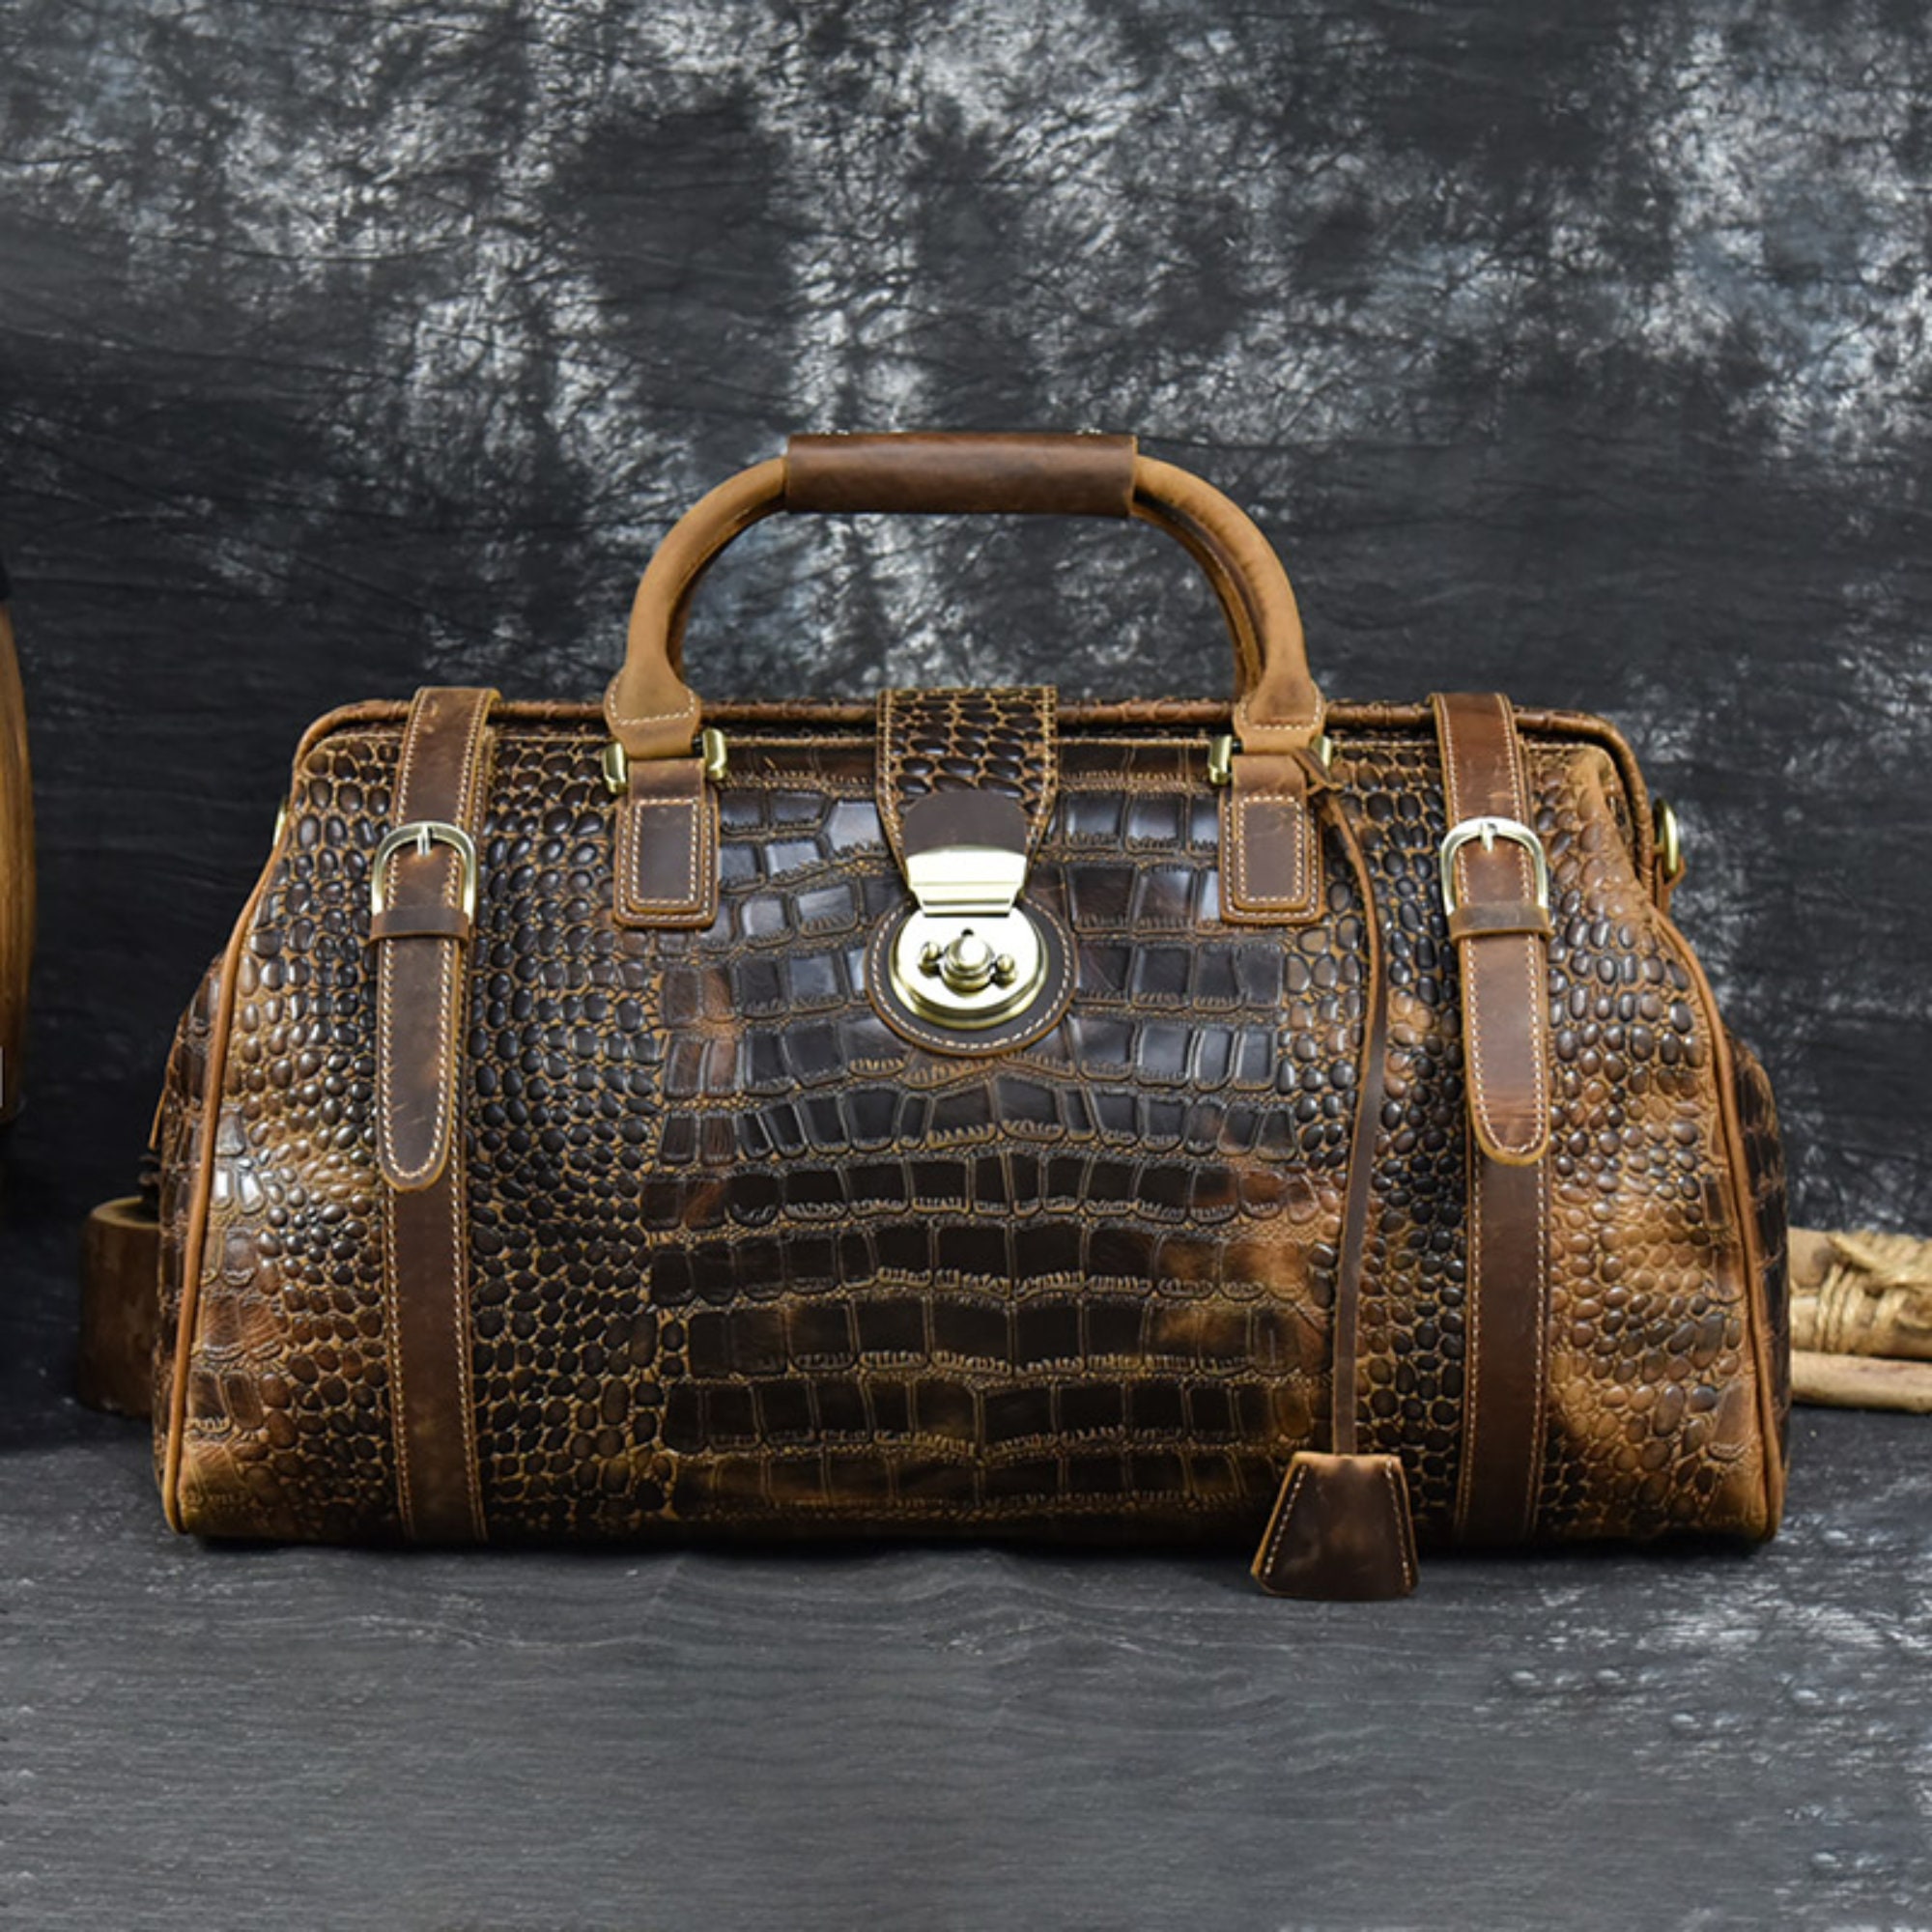 Crocodile Skin Bags - 88 For Sale on 1stDibs  crocodile skin handbag price,  crocodile bags price, crocodile skin bags price